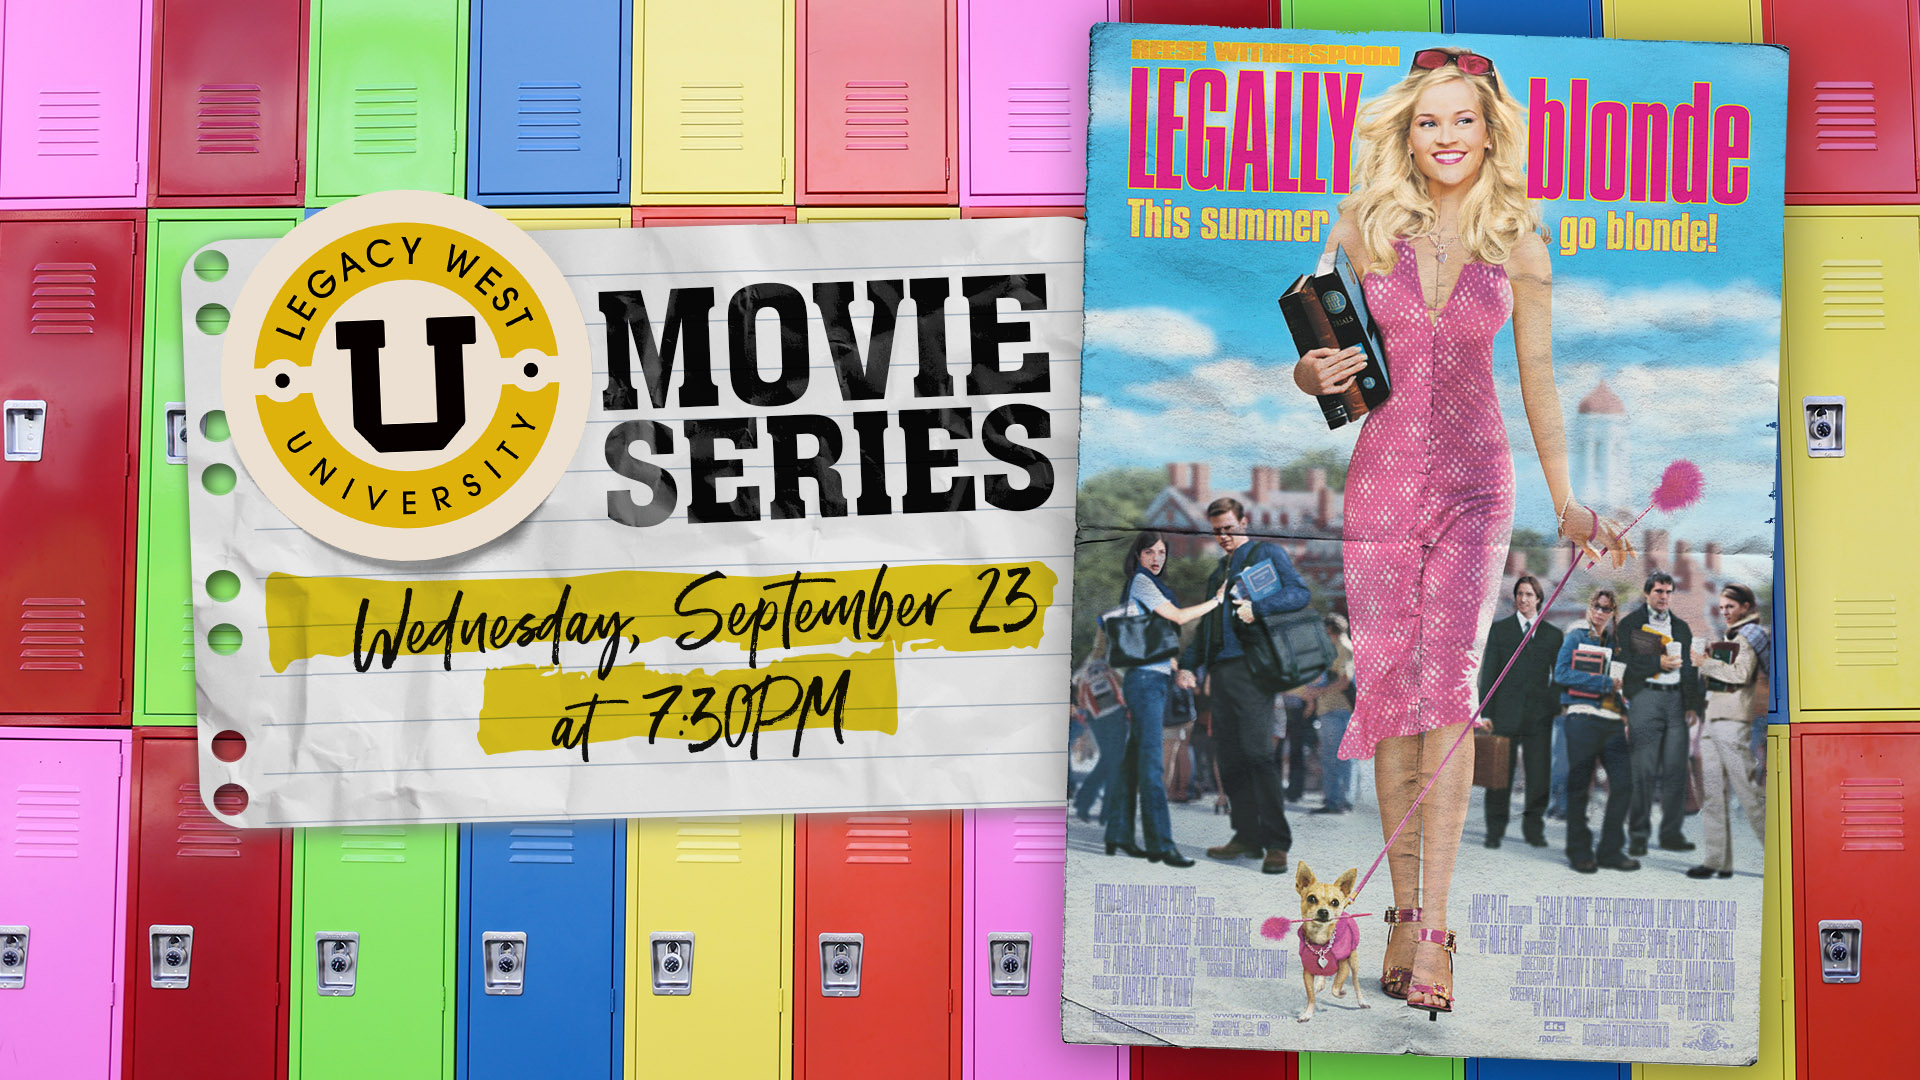 Legacy West University Movie Series: Legally Blonde - hero